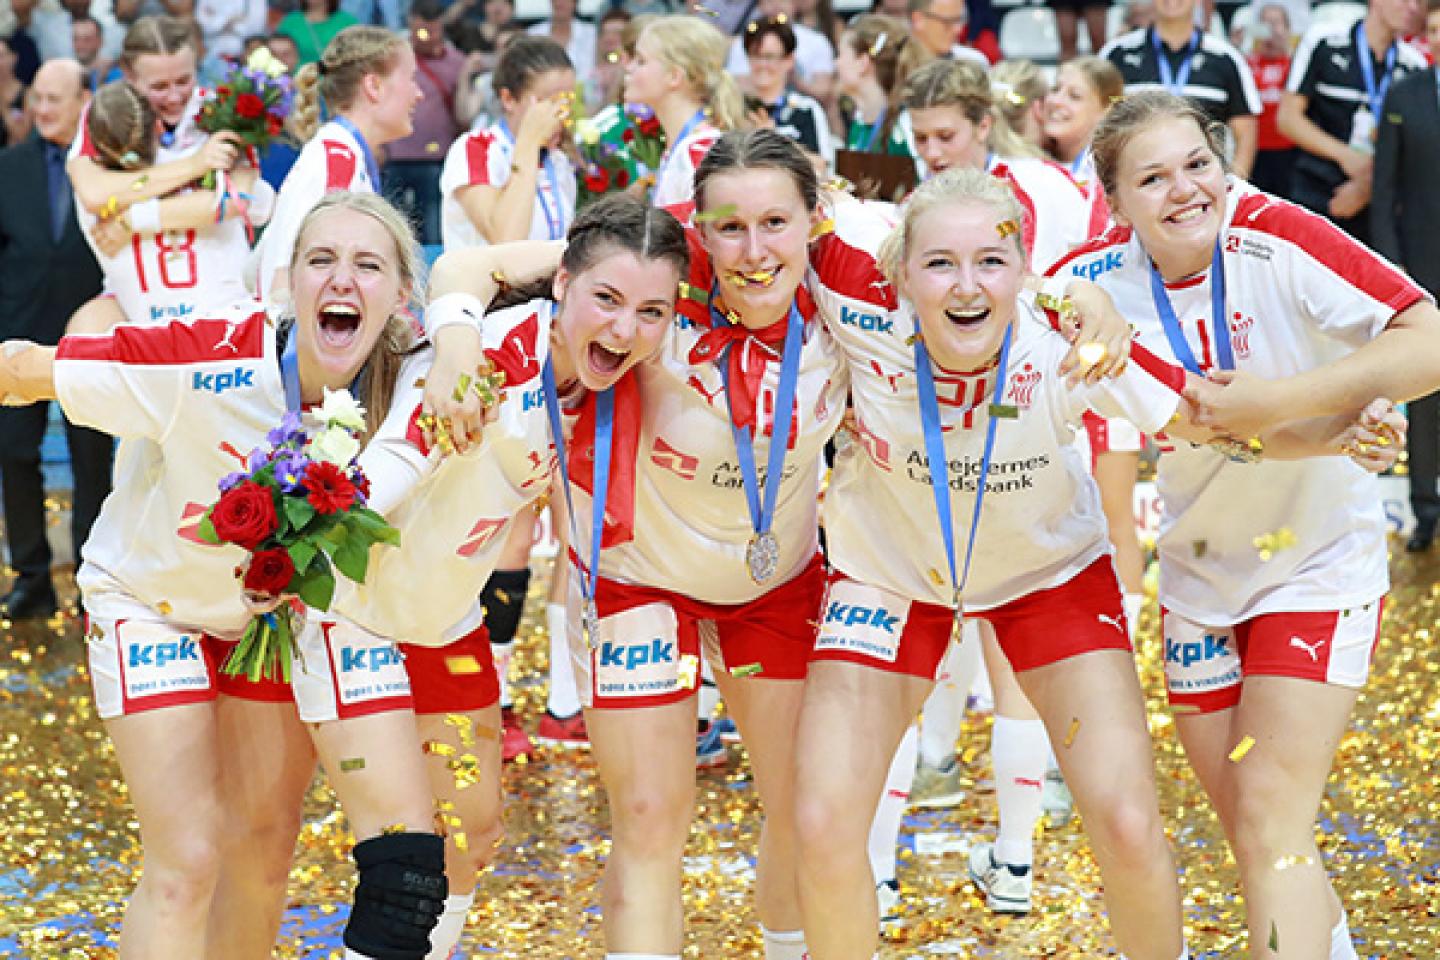 Denmark claim the World Championship trophy